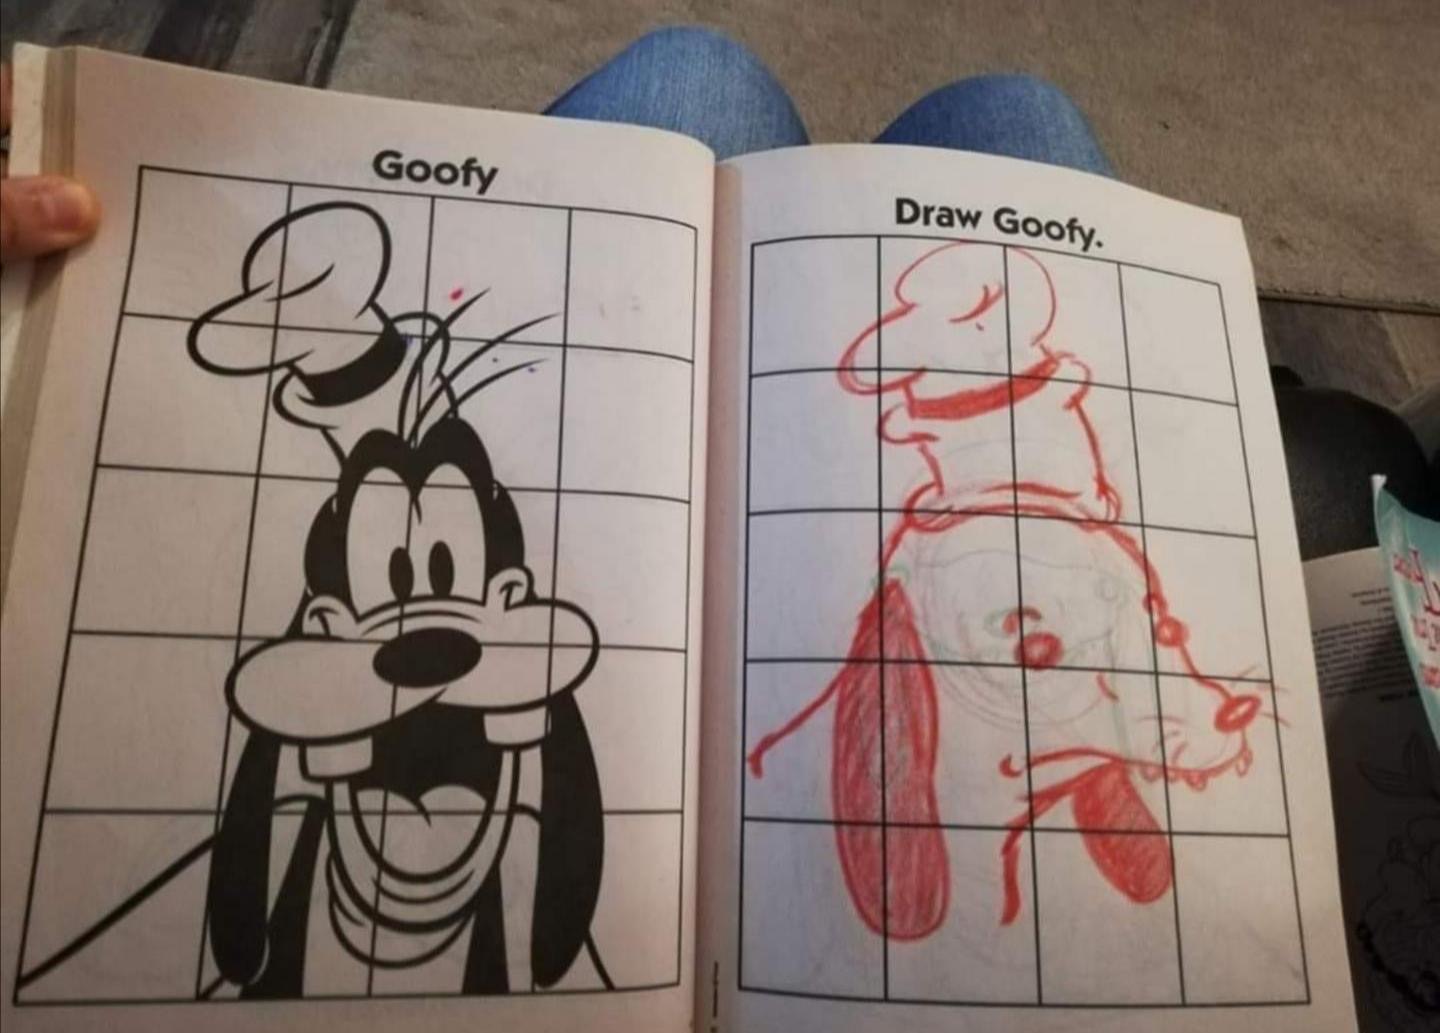 cursed images reddit - Goofy Draw Goofy.